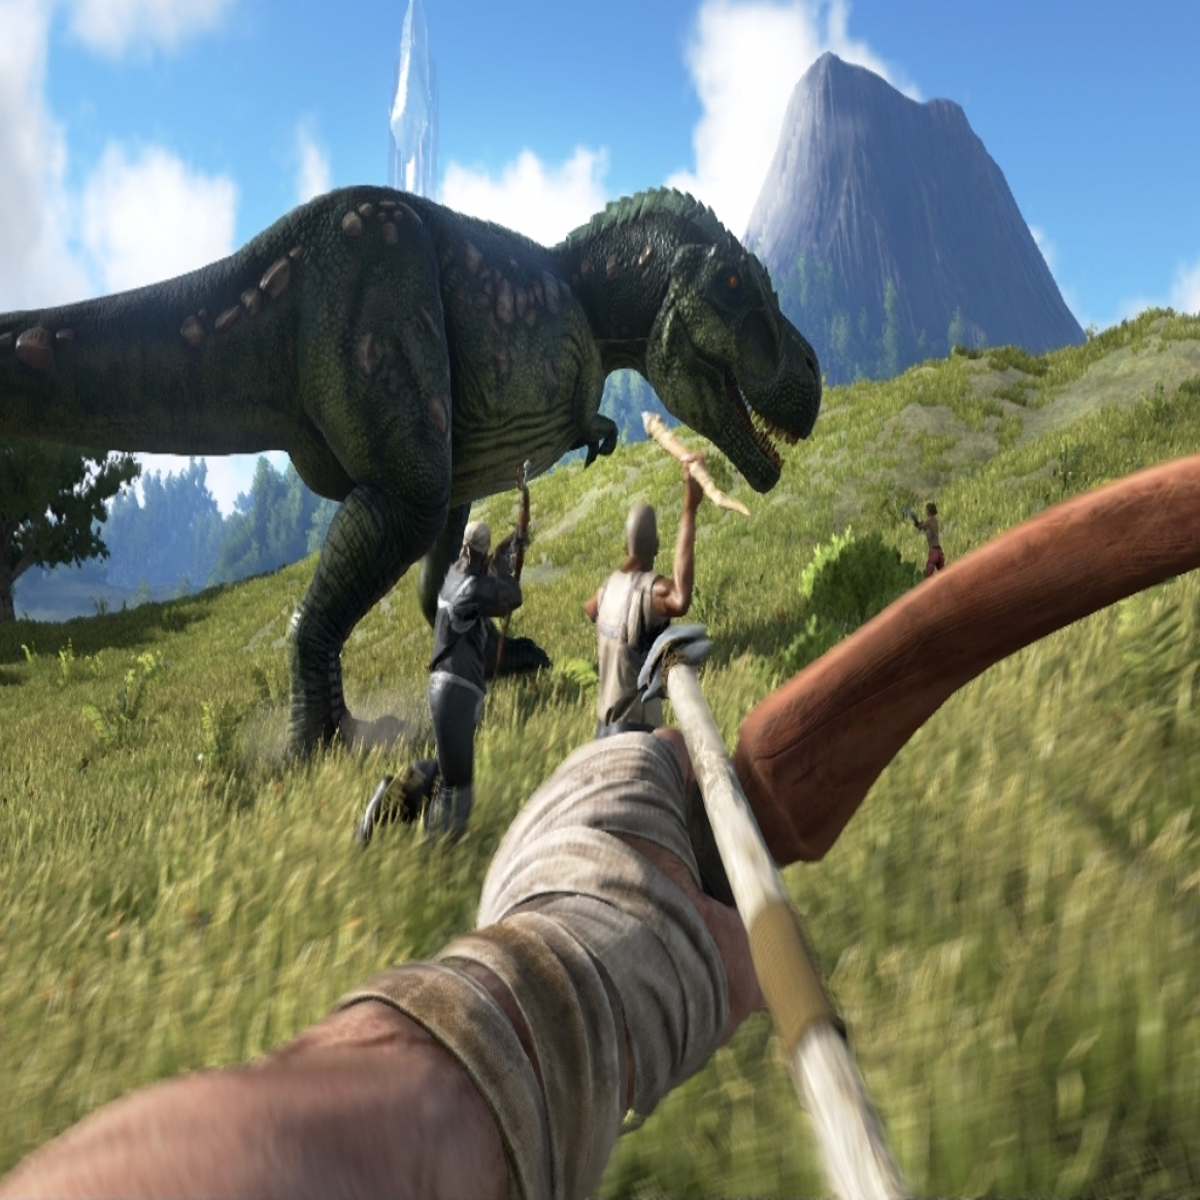 Is Ark: Survival Evolved cross-platform? Crossplay on Xbox, PS5